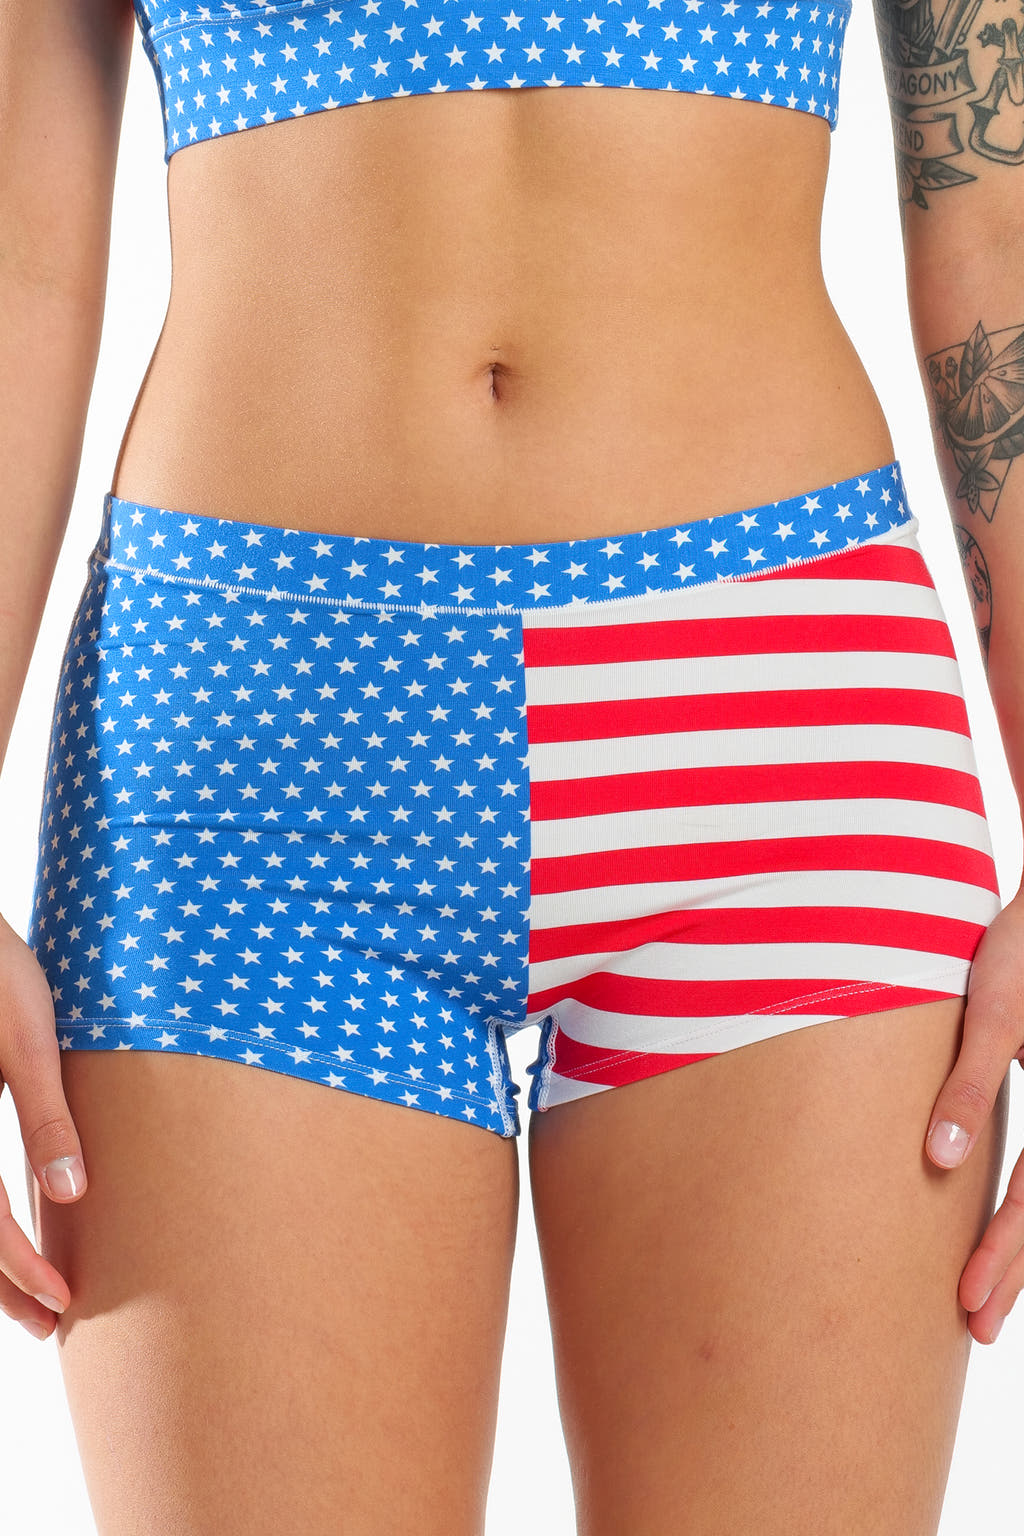 The Ellis Island | USA Flag Modal Boyshort Underwear